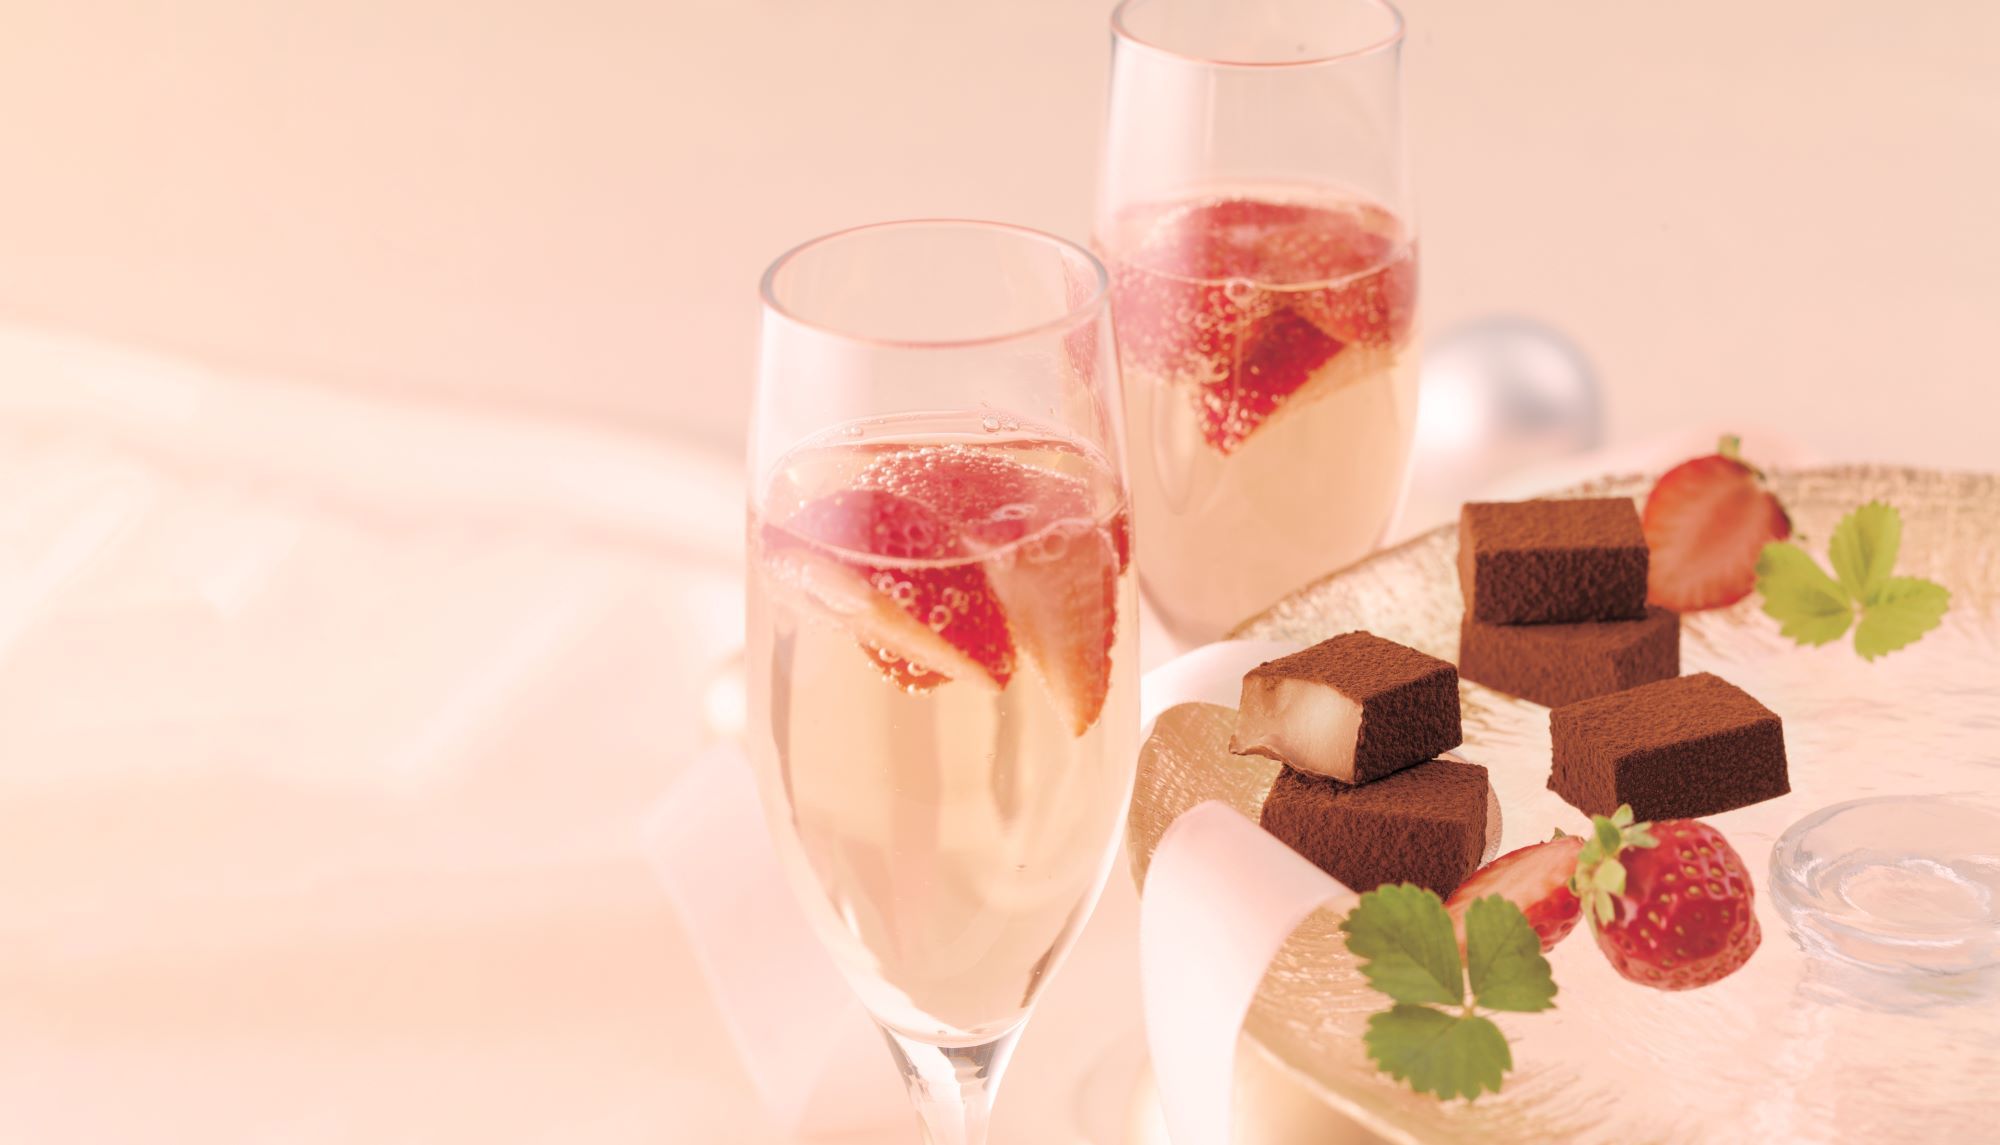 Maison strawberry champagne. Бокал шампанского с клубникой. Клубника в шоколаде и шампанское. Пирожное и шампанское. Бокал с конфетами.